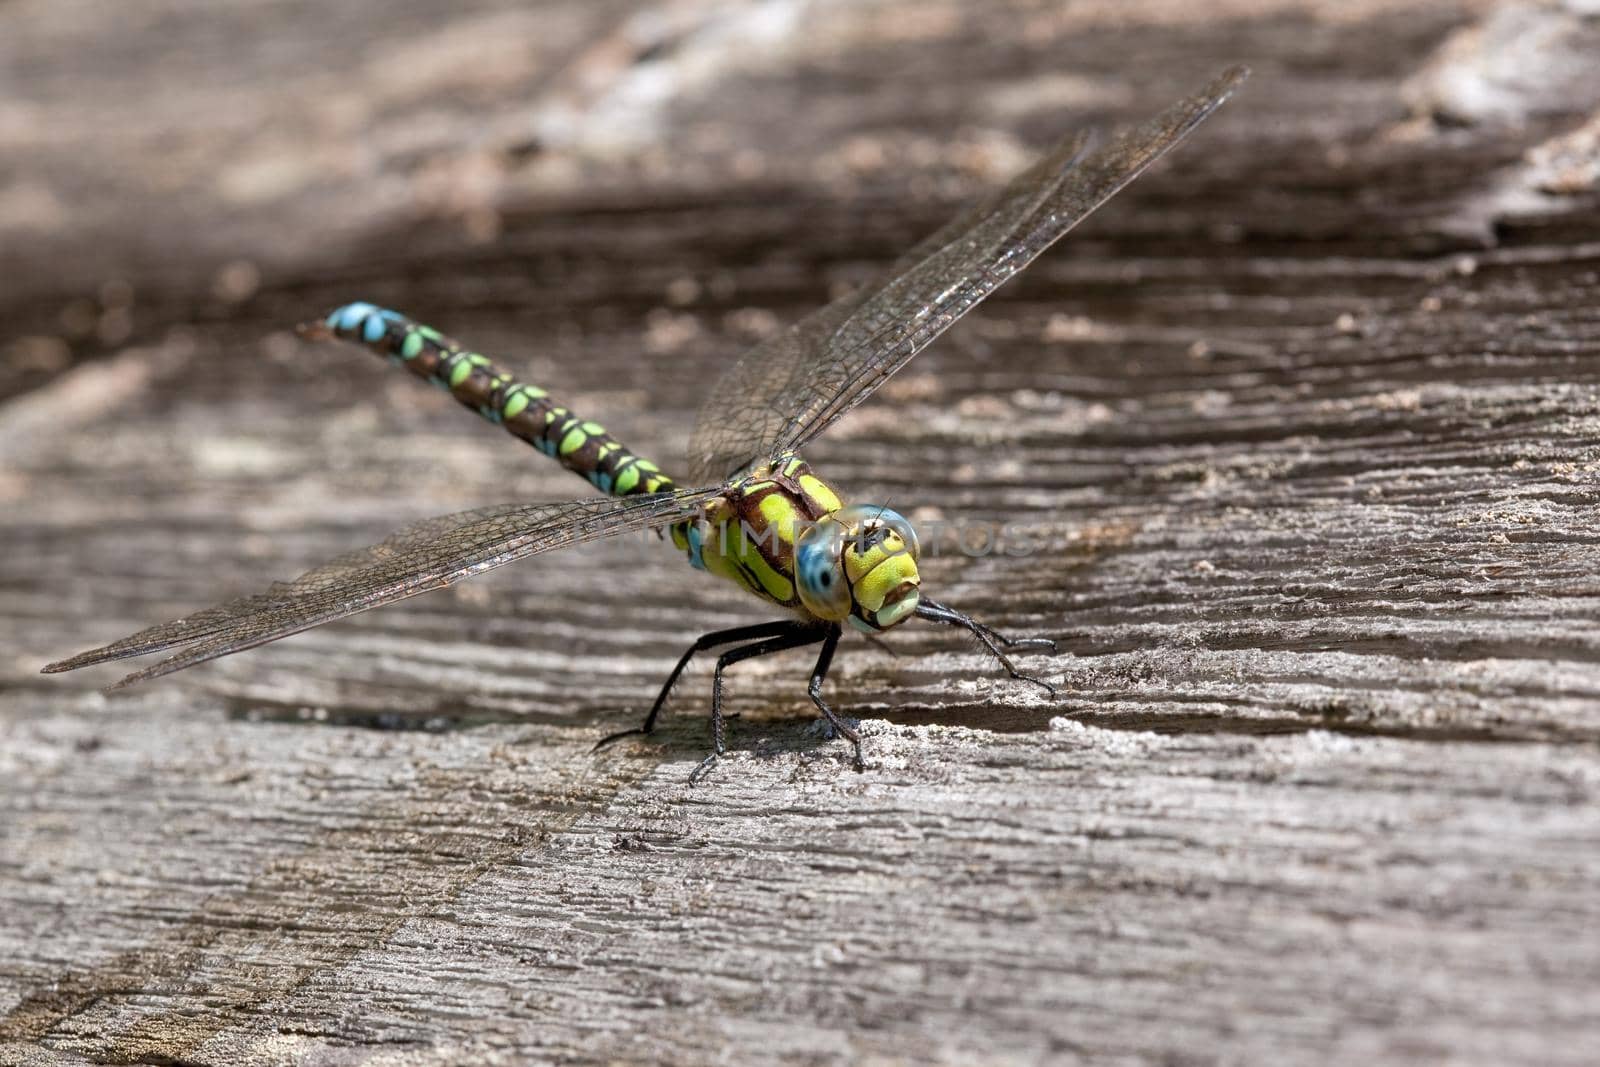 Dragonfly with big blue eyes by Lincikas